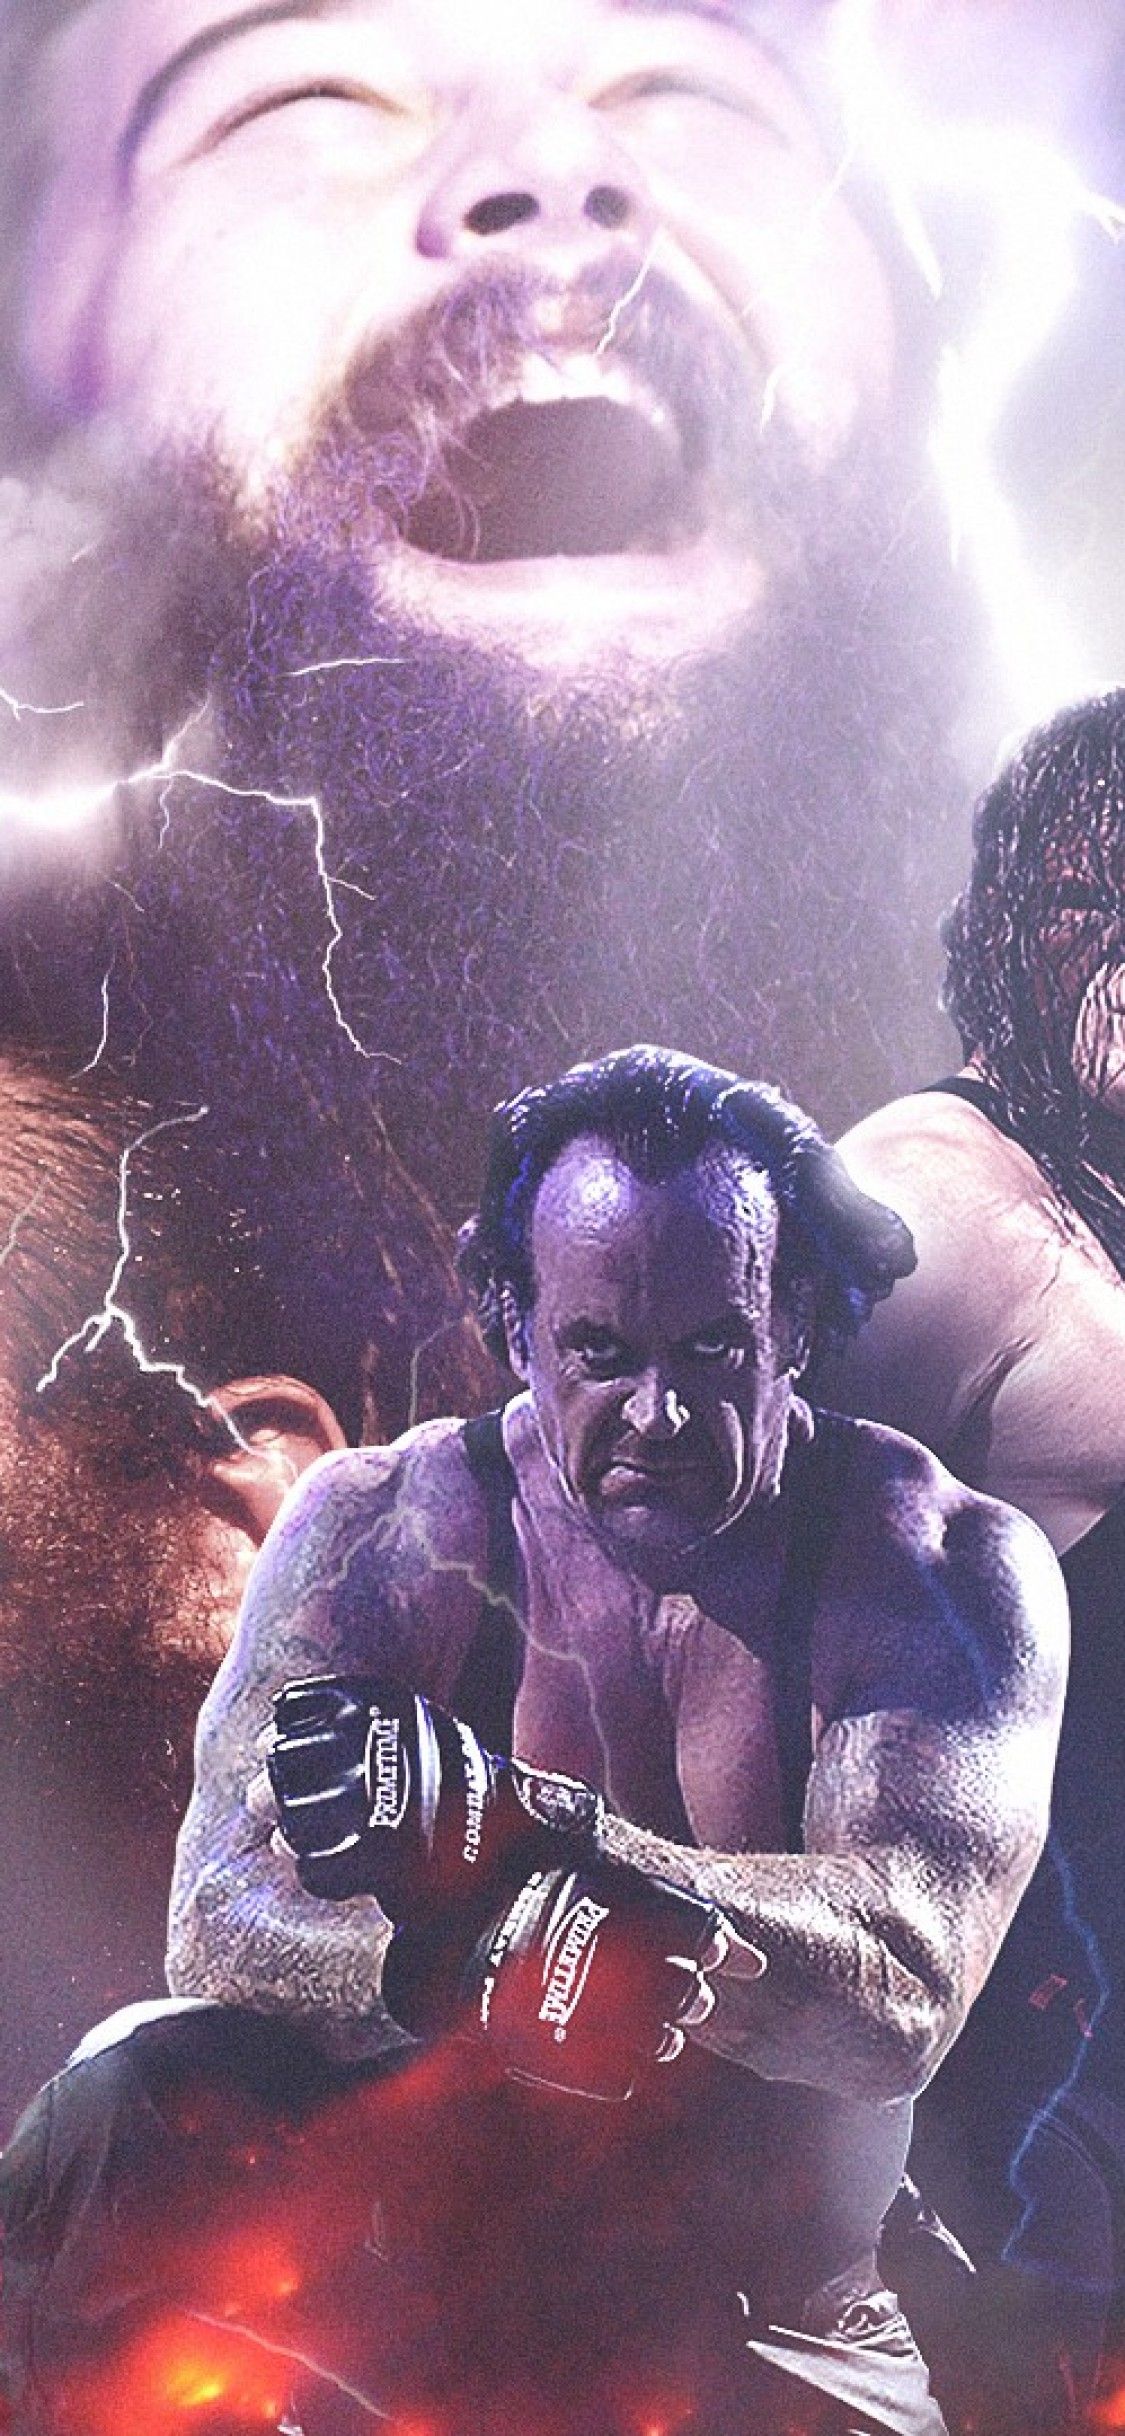 The Undertaker iPhone XS Wallpaper Download